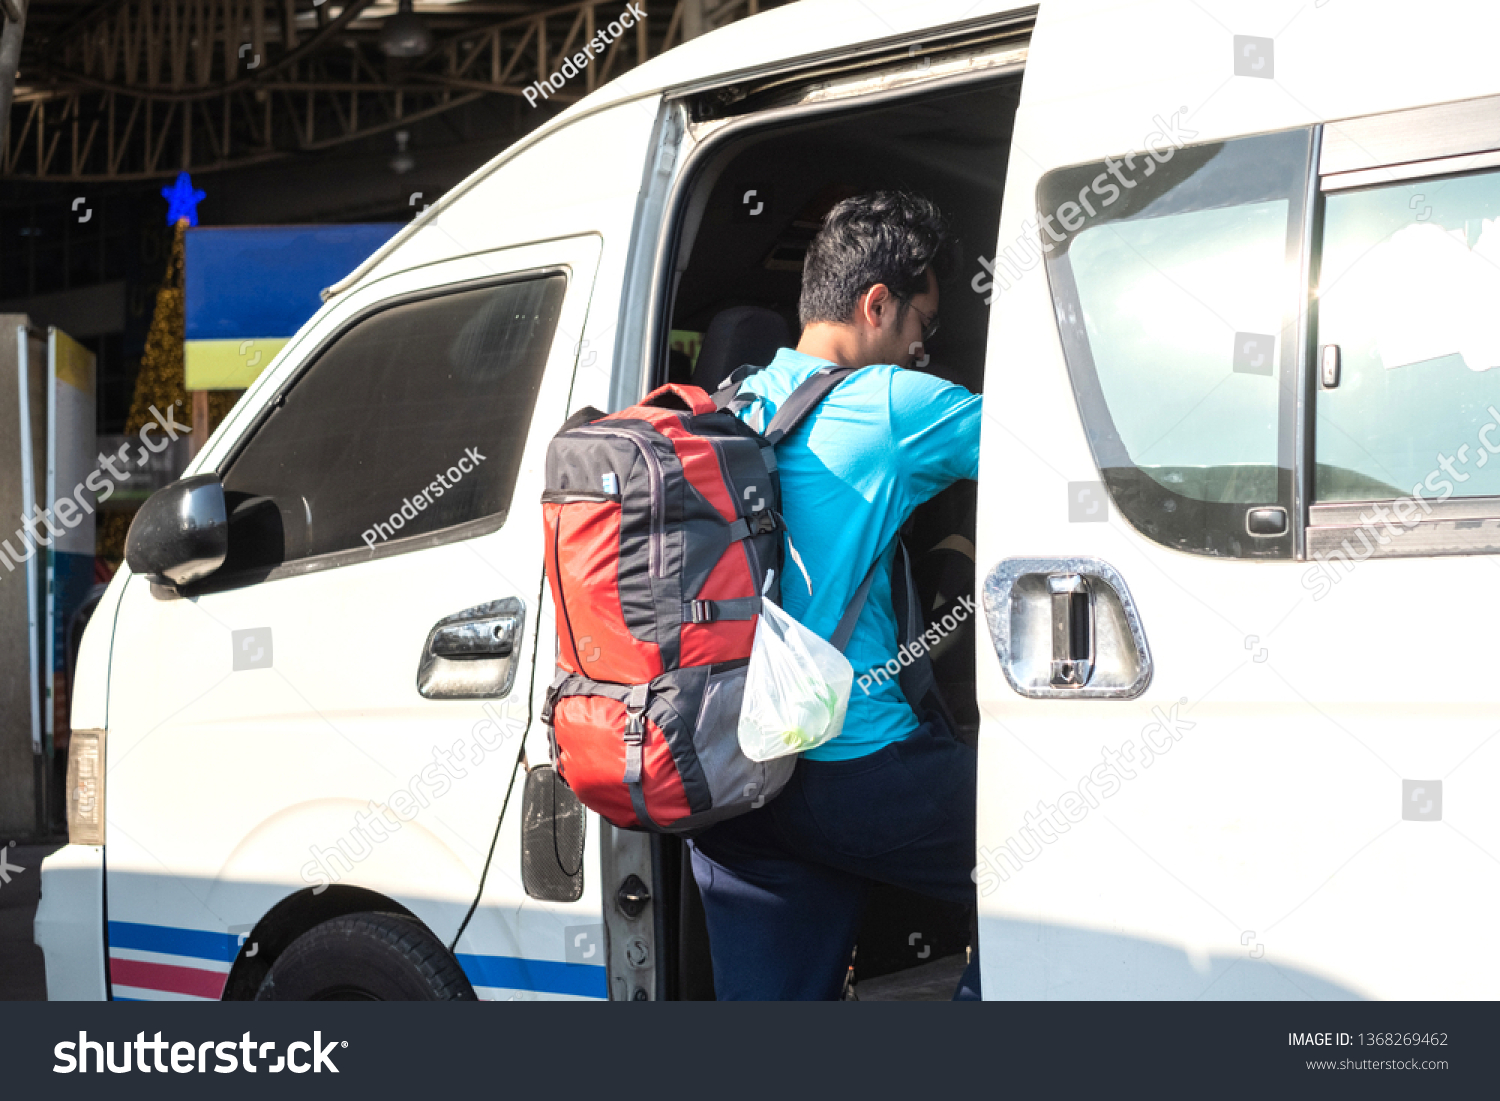 Backpack traveller travel using public van or mini bus in Thailand. #1368269462